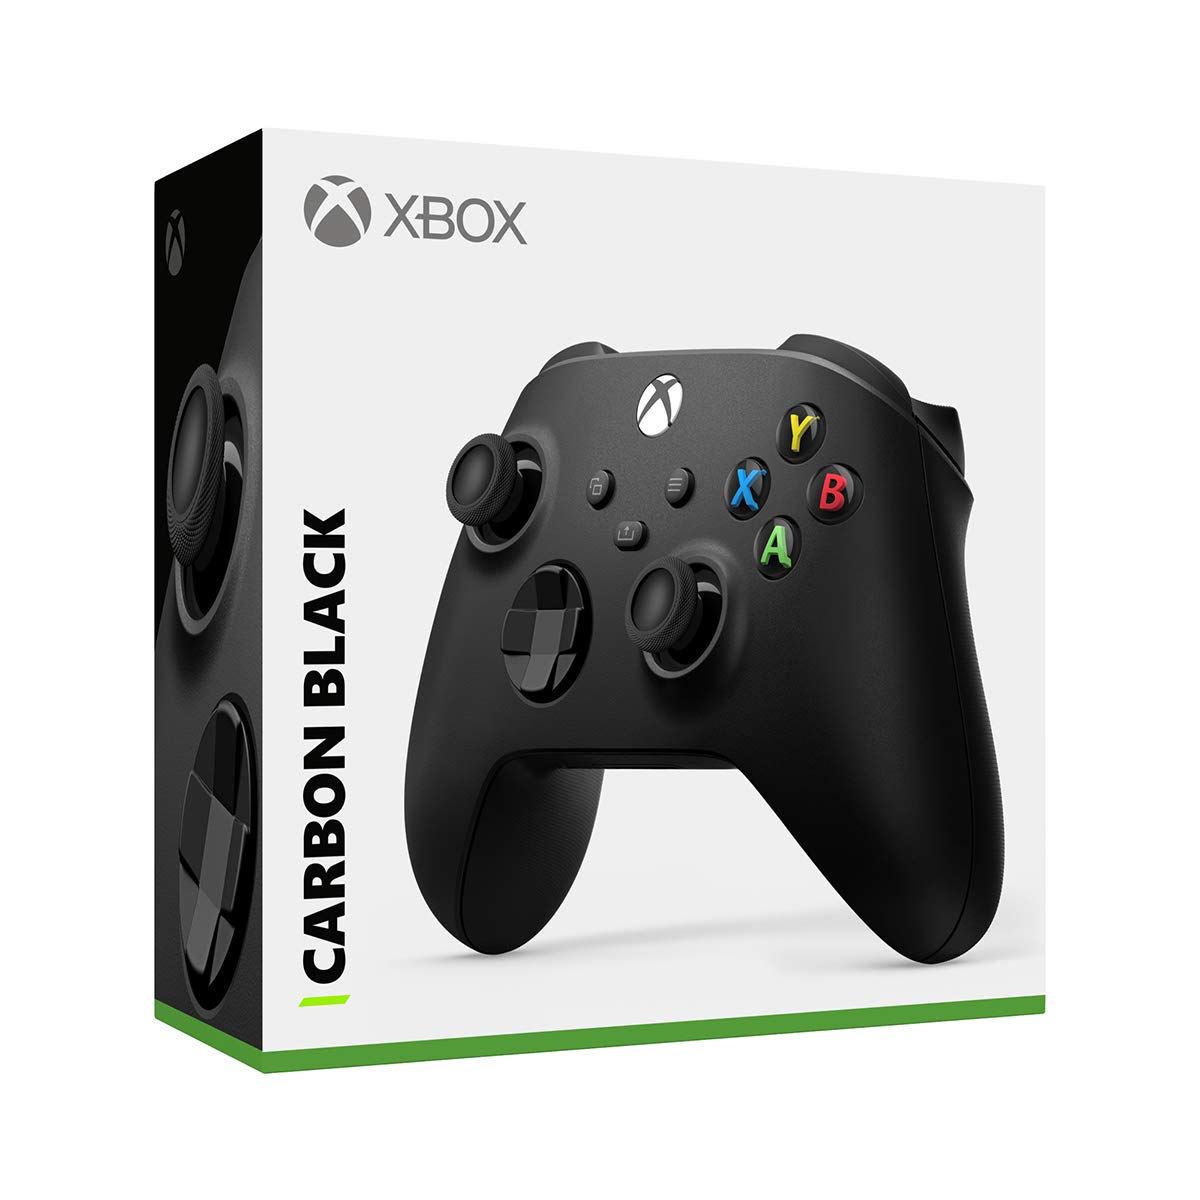 Microsoft Xbox Wireless Controller (Carbon Black) $49 at Gamestop